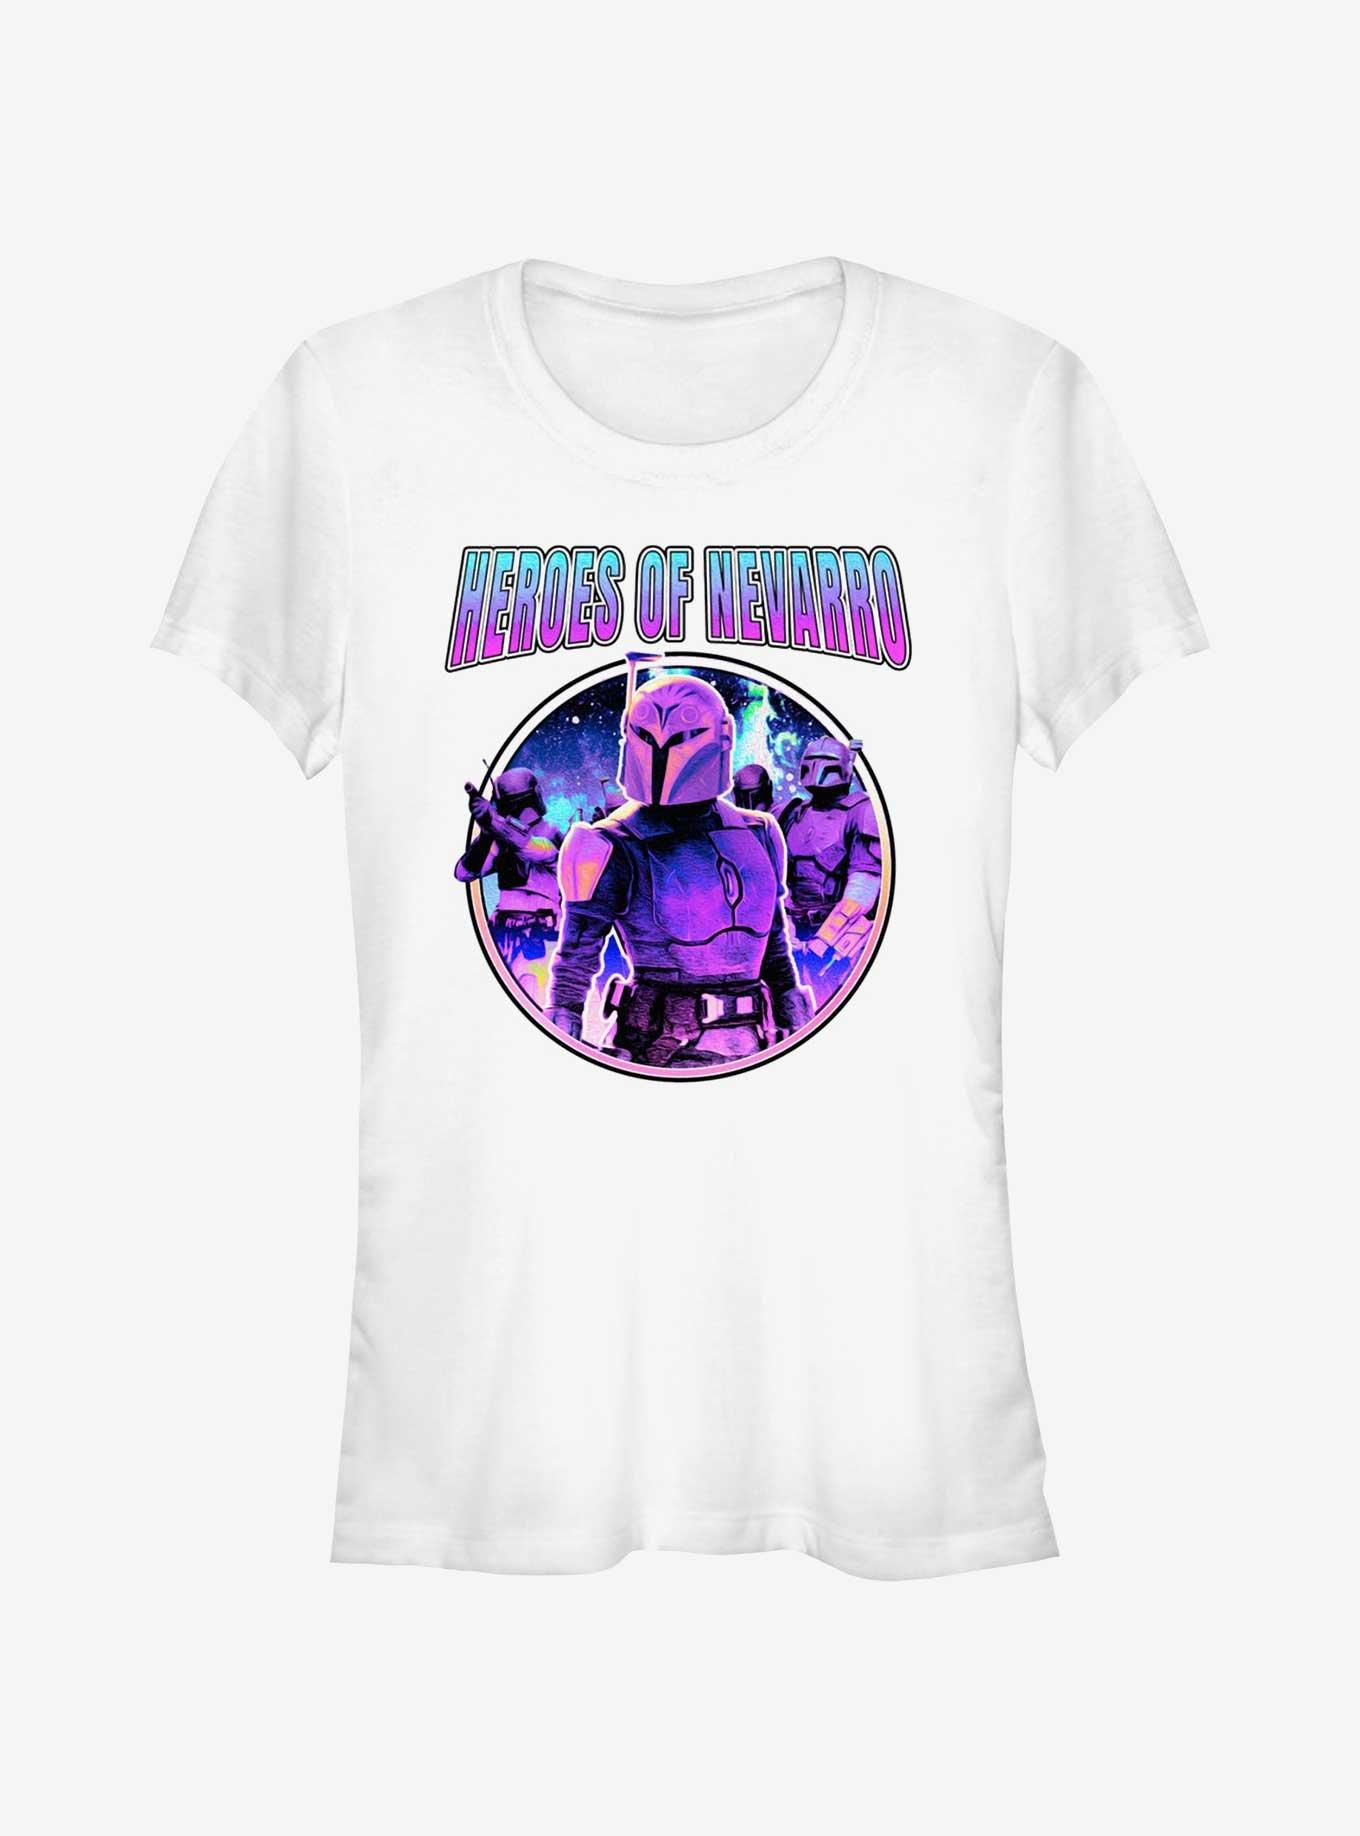 Star Wars The Mandalorian Heroes of Nevarro Girls T-Shirt